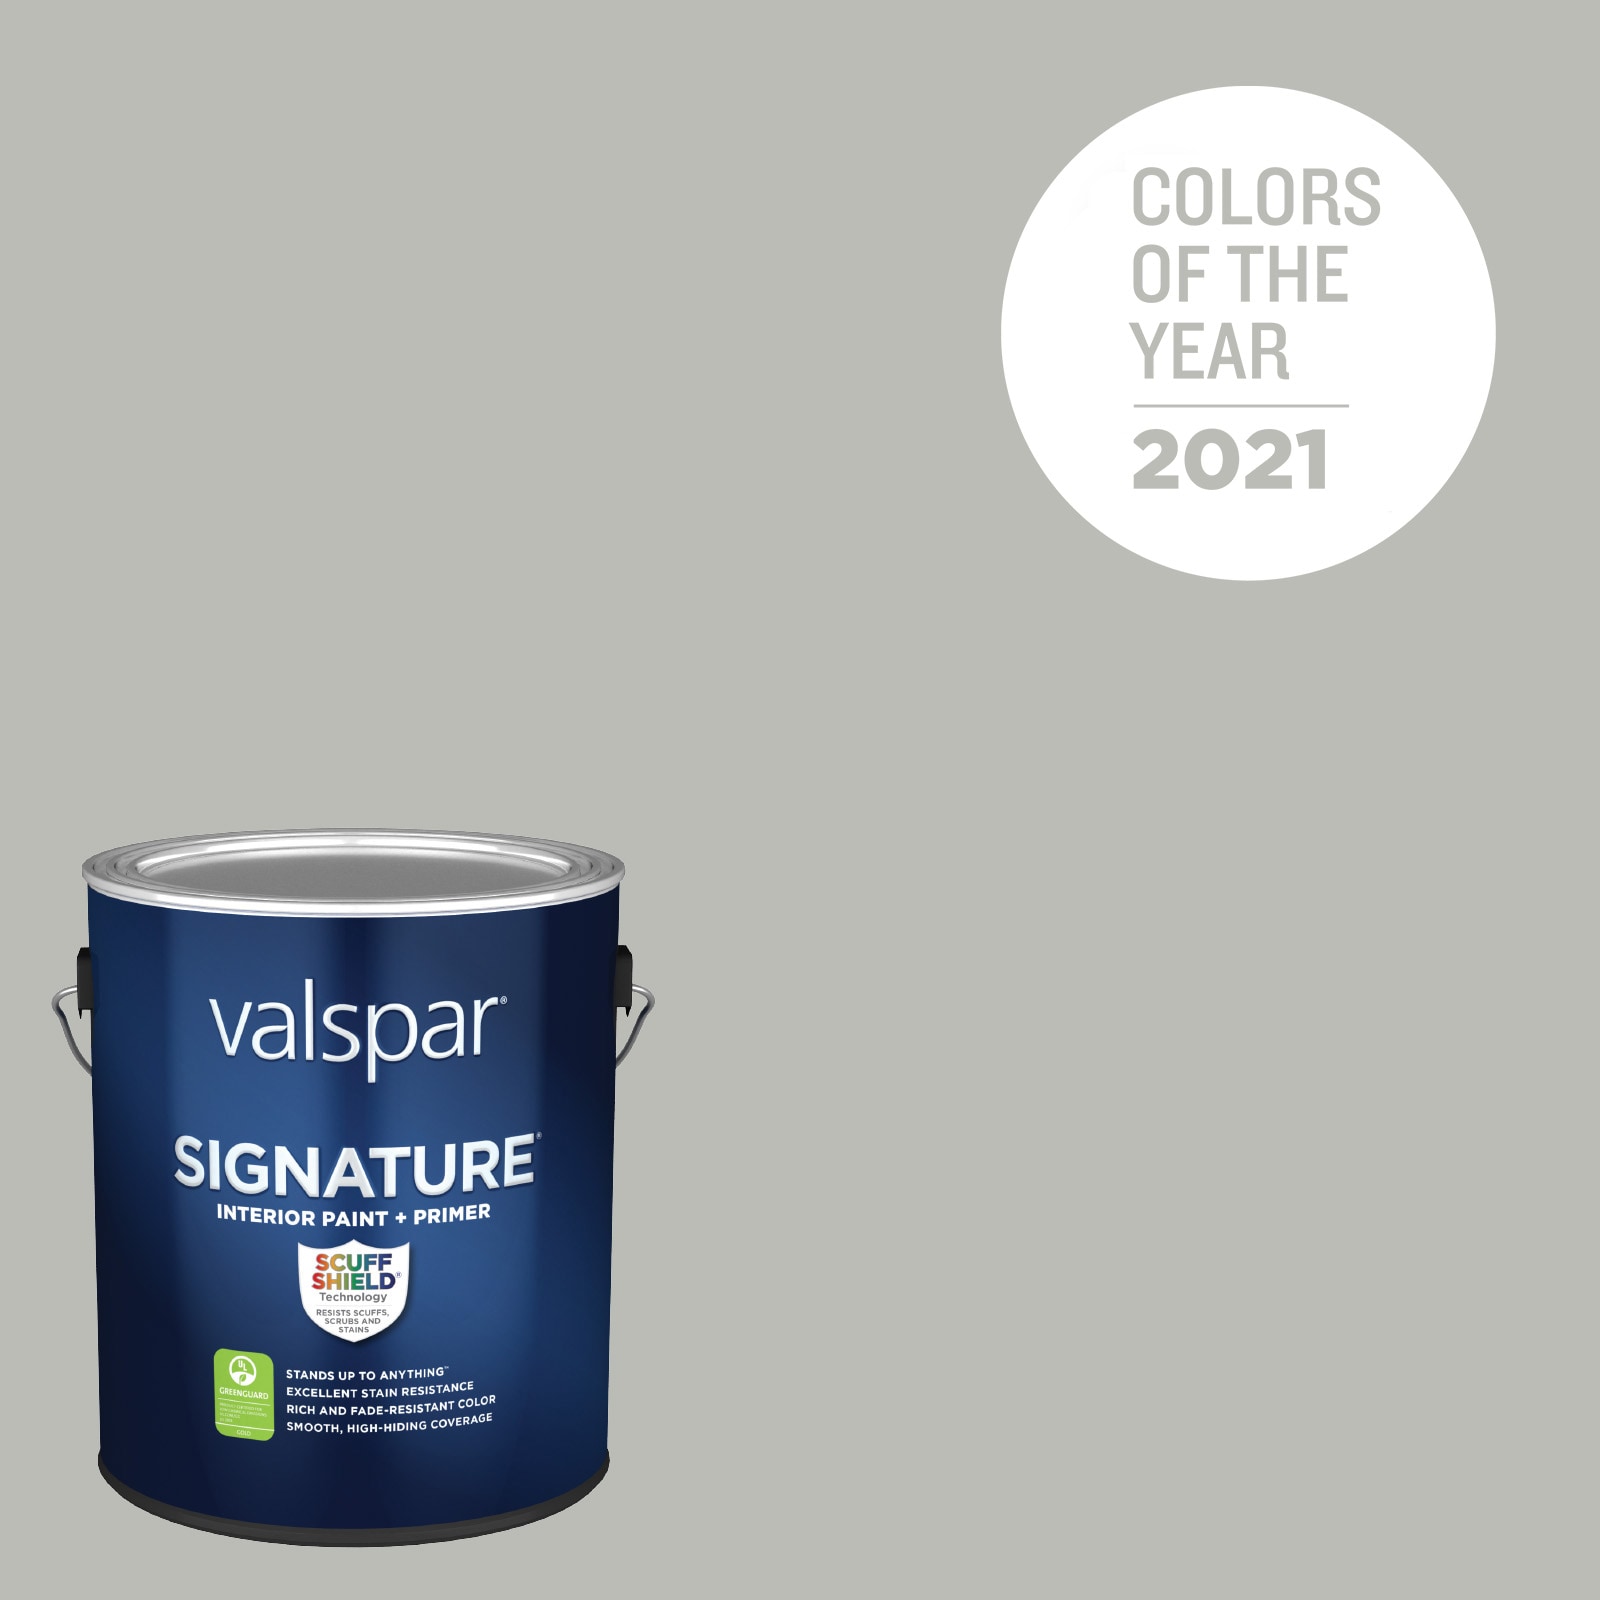 Valspar Flat Alabaster Stone Sandstone Spray Paint and Primer In